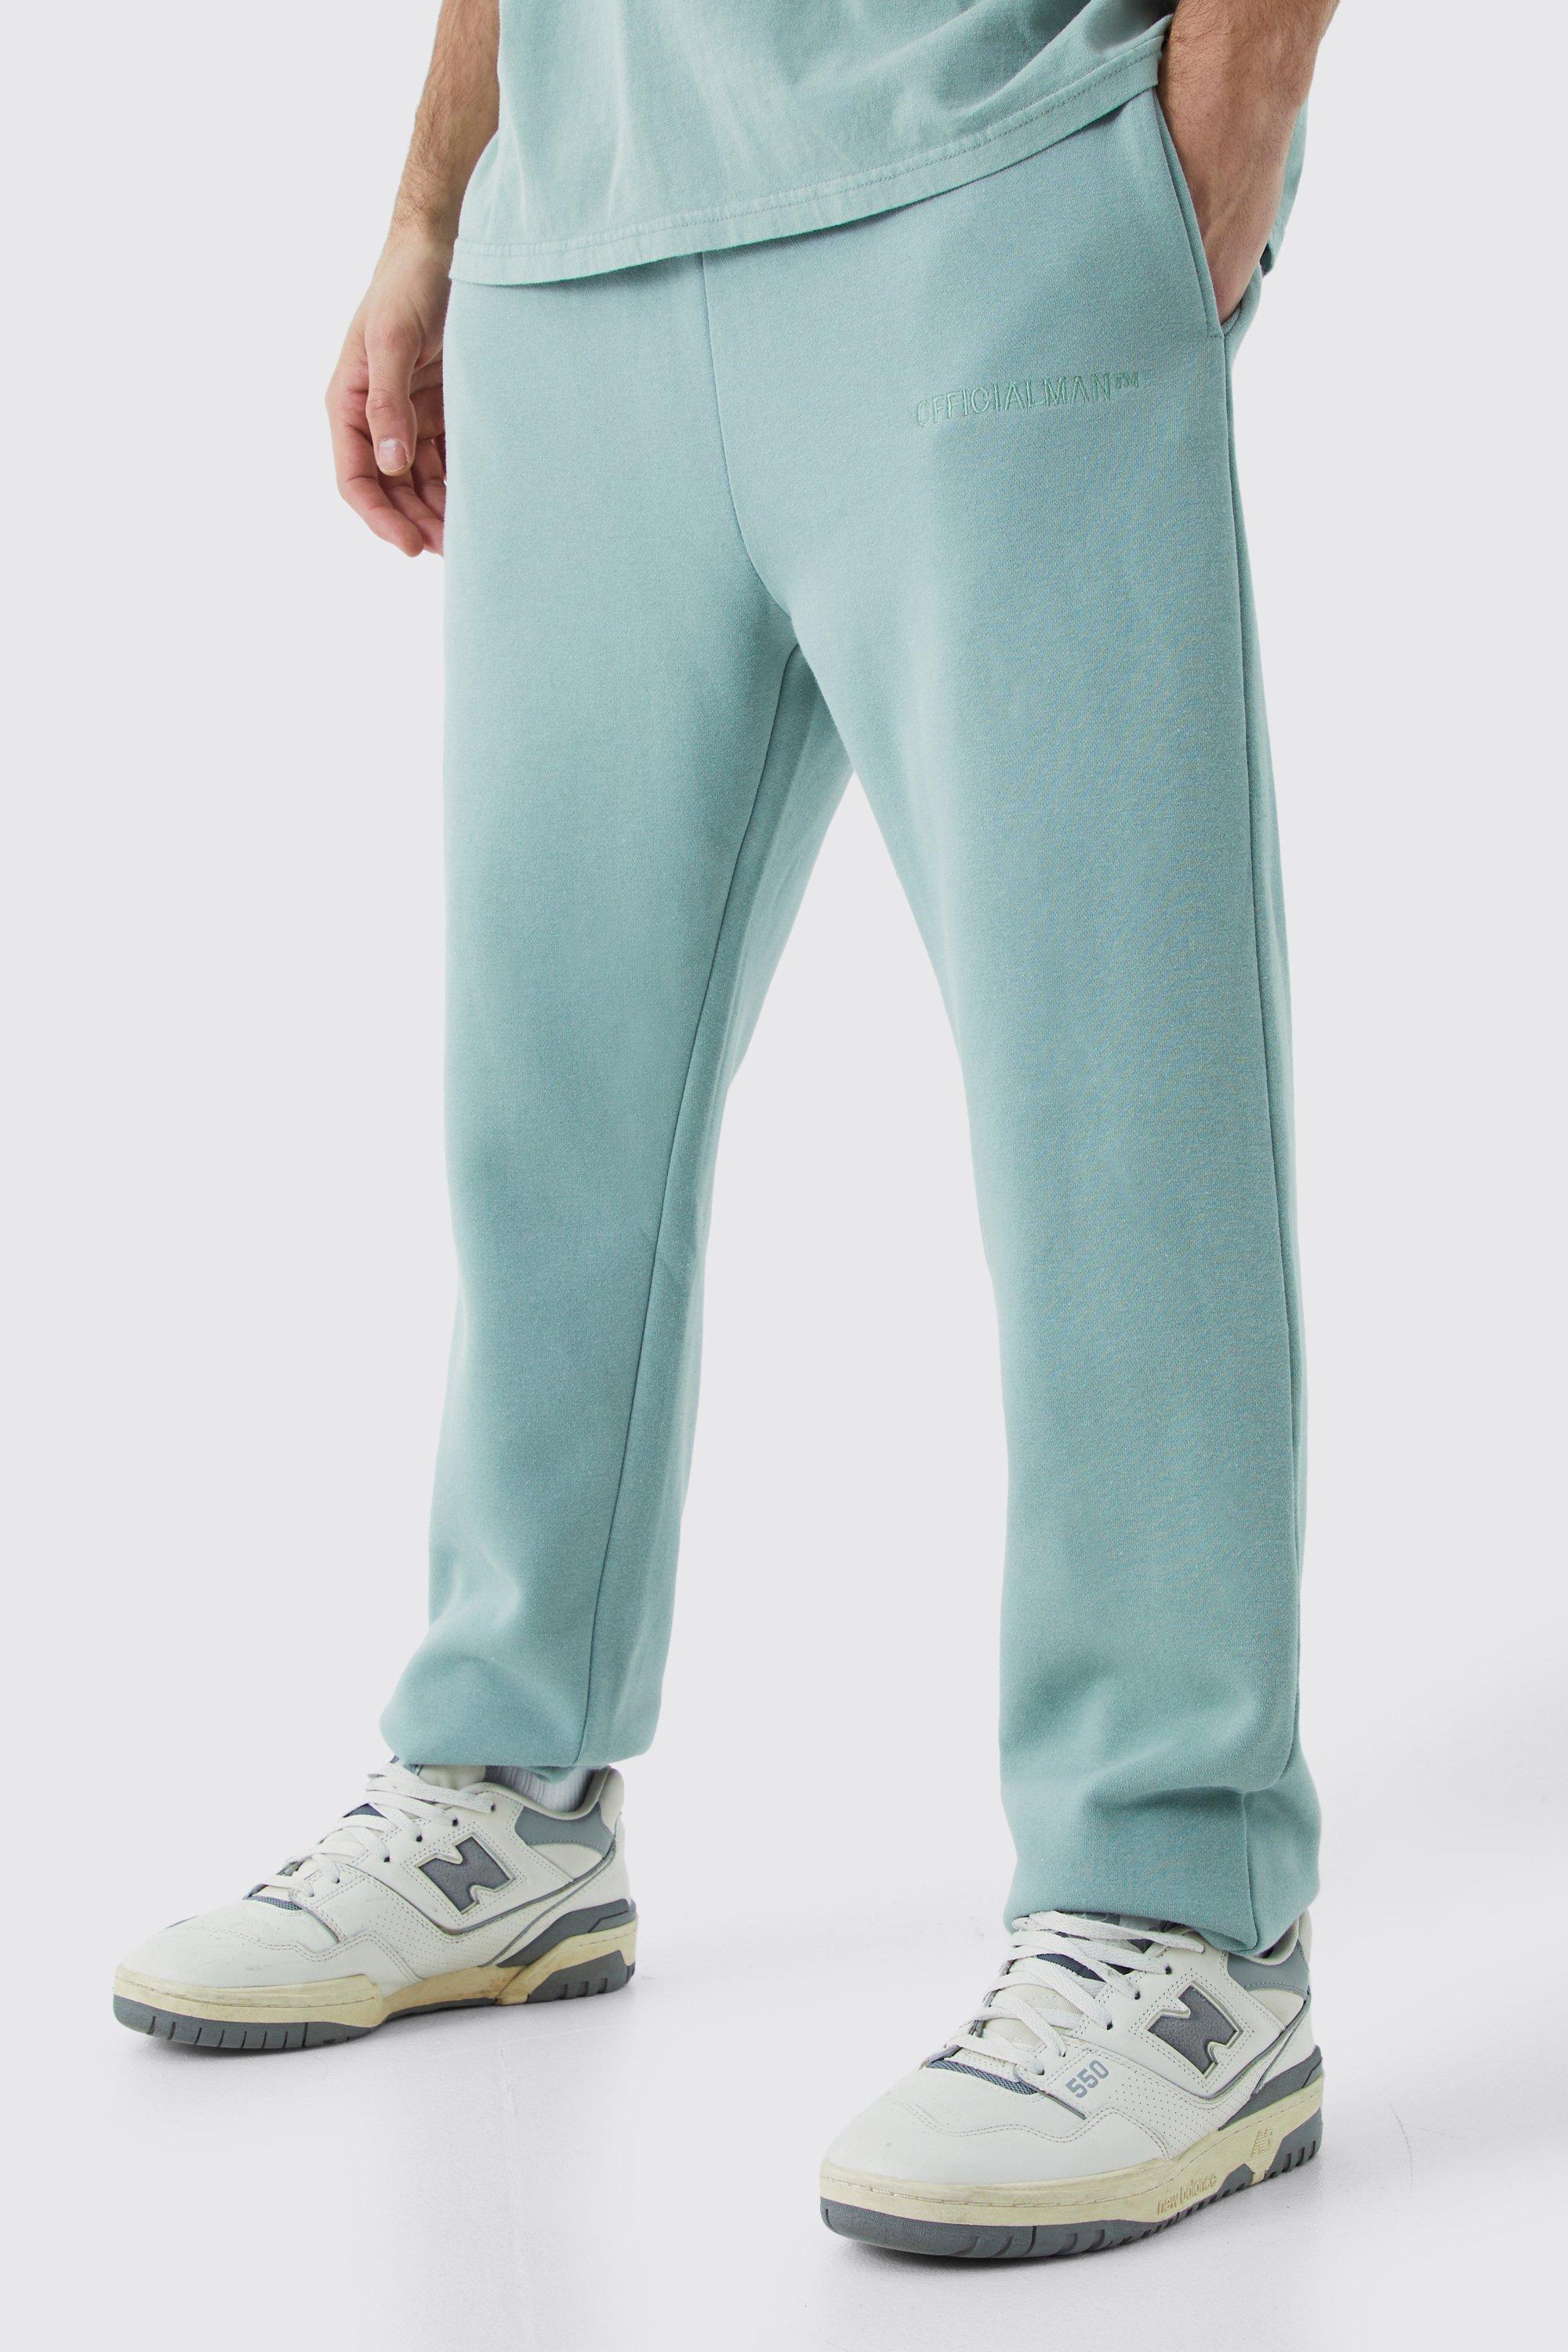 Image of Pantaloni tuta Core Fit Official slavati, Verde